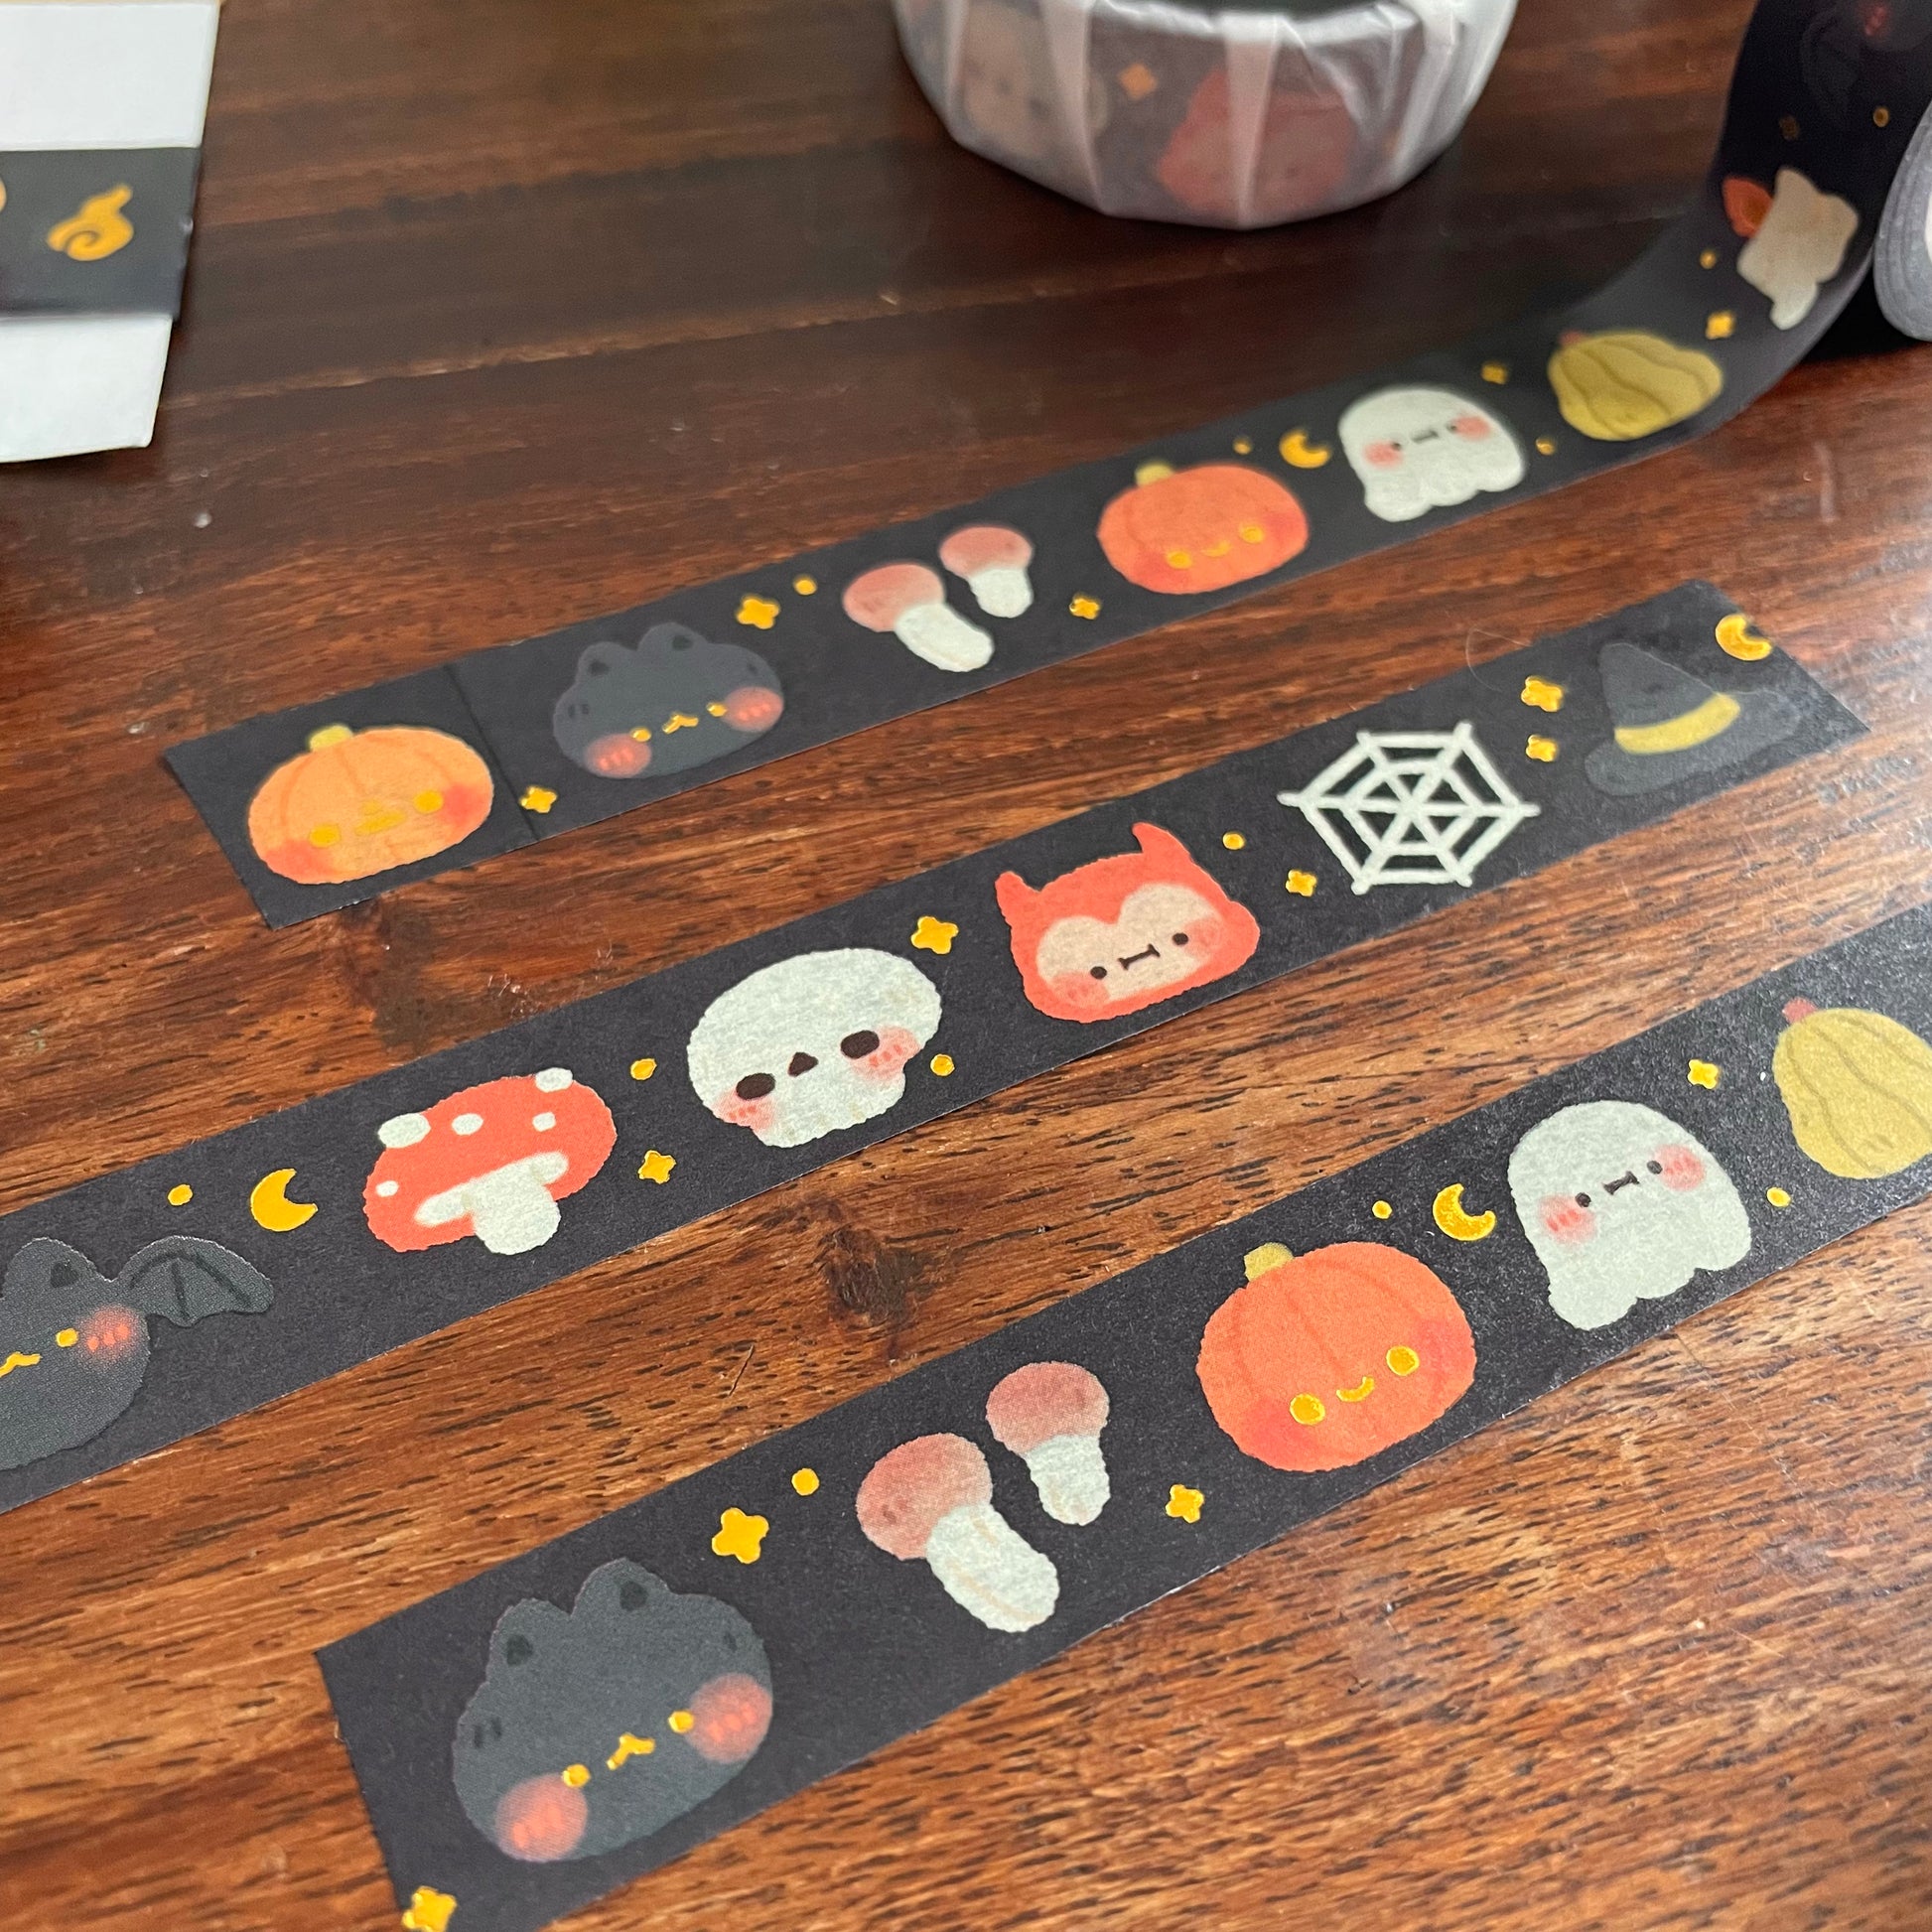 Halloween Tarot Stamp Washi Tape – kamiaristudio